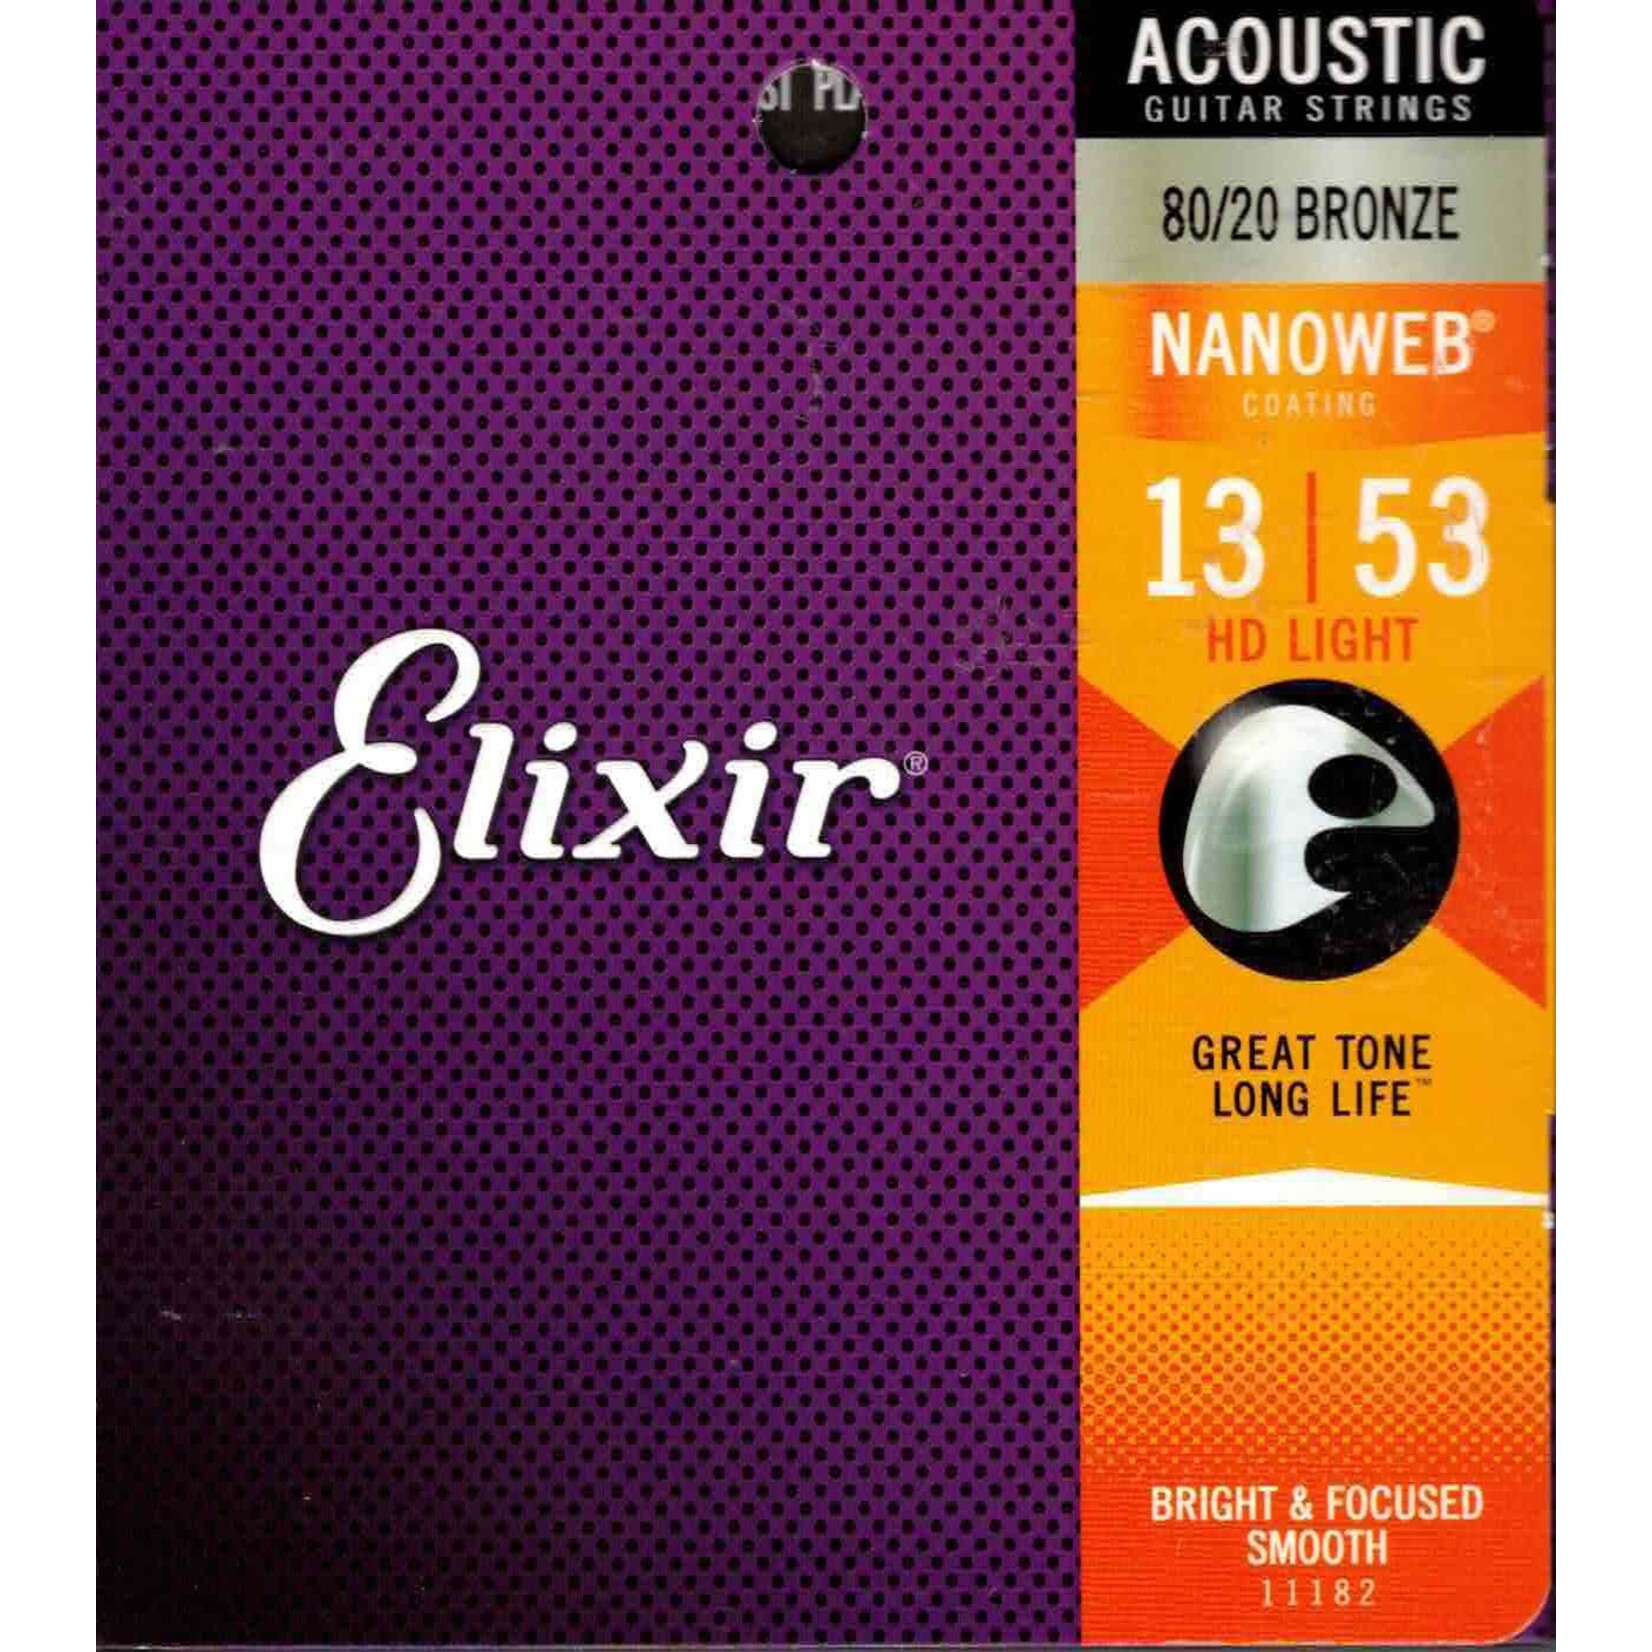 Elixir 13-53 HD Light 80/20 Bronze Acoustic Guitar Strings